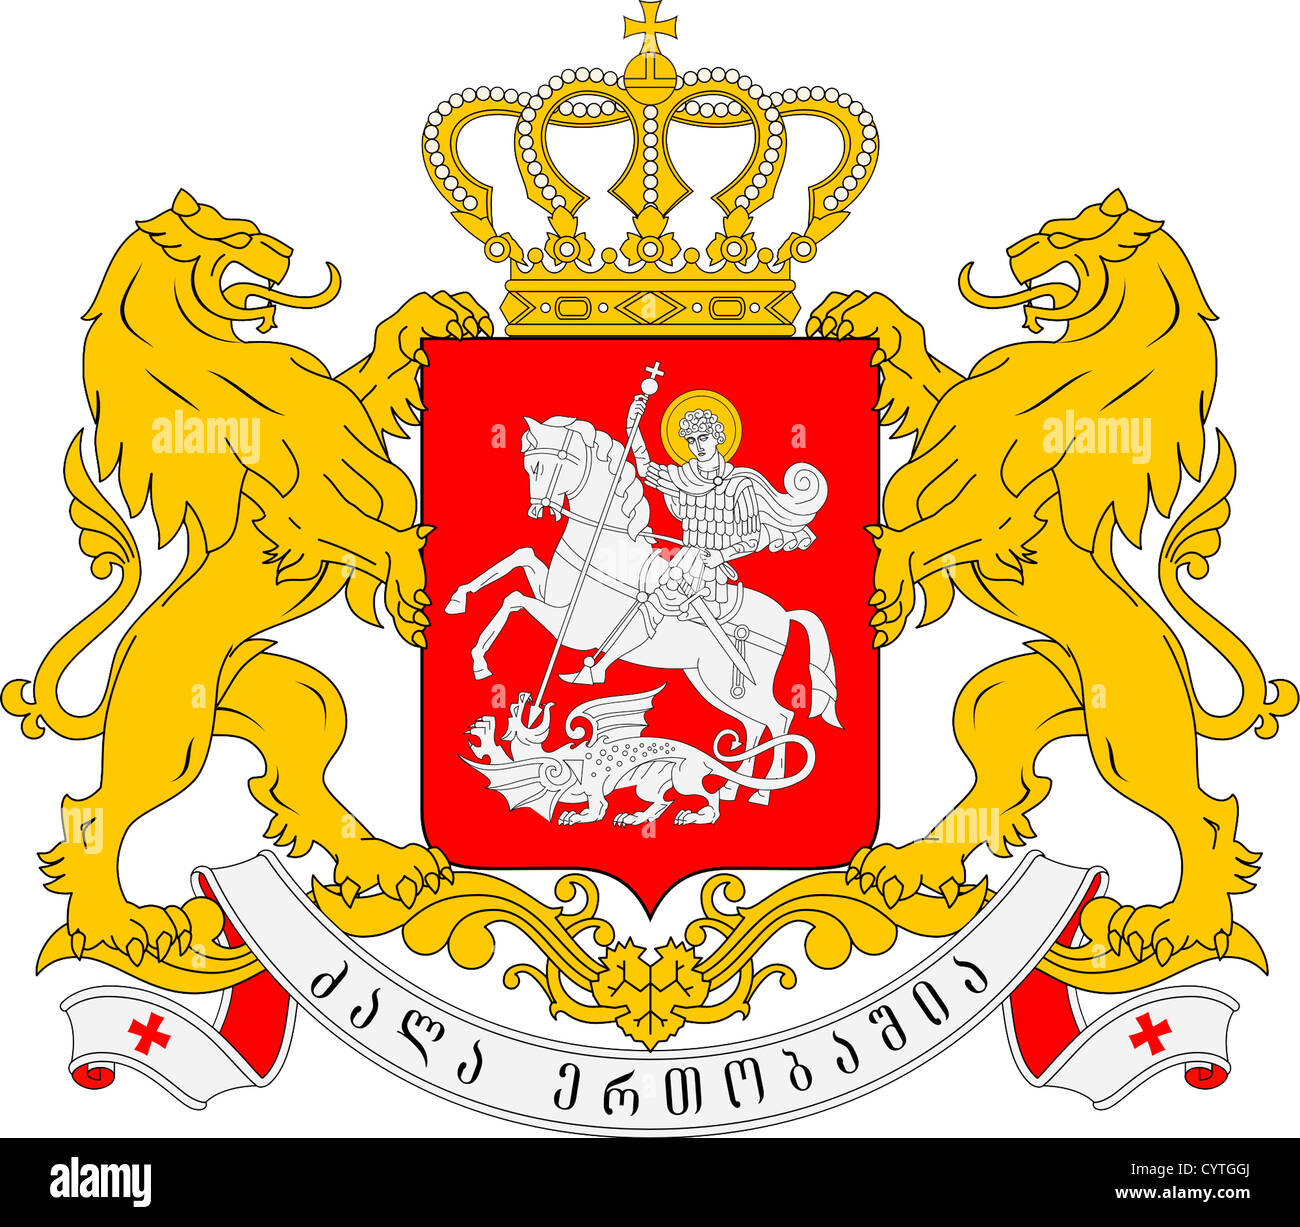 Coat of arms of Georgia. Stock Photo